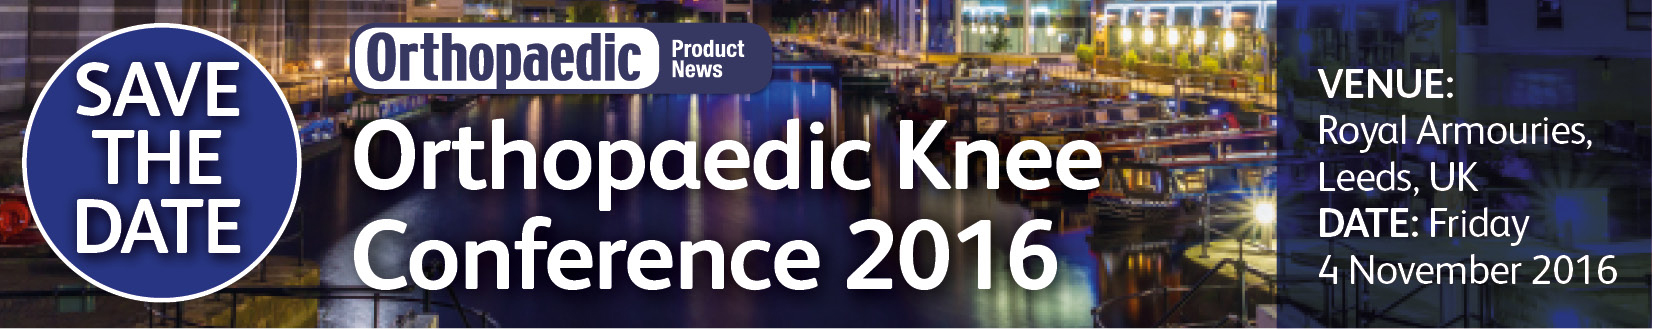 Orthopaedic Knee Conference 2016